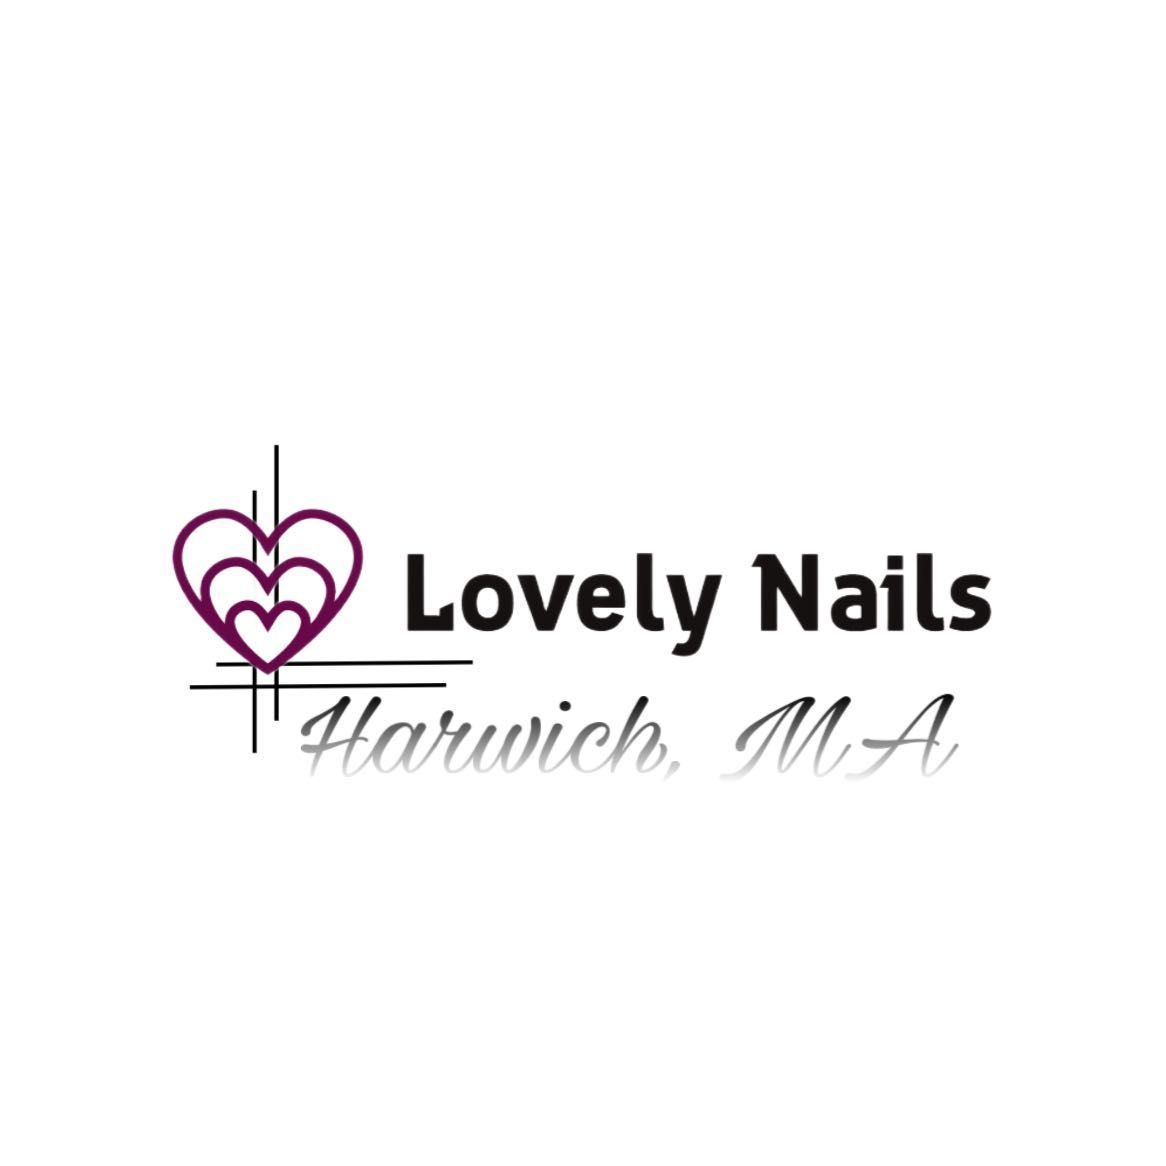 Lovely Nails II, 715 Main St, Harwich, MA, Harwich, 02645